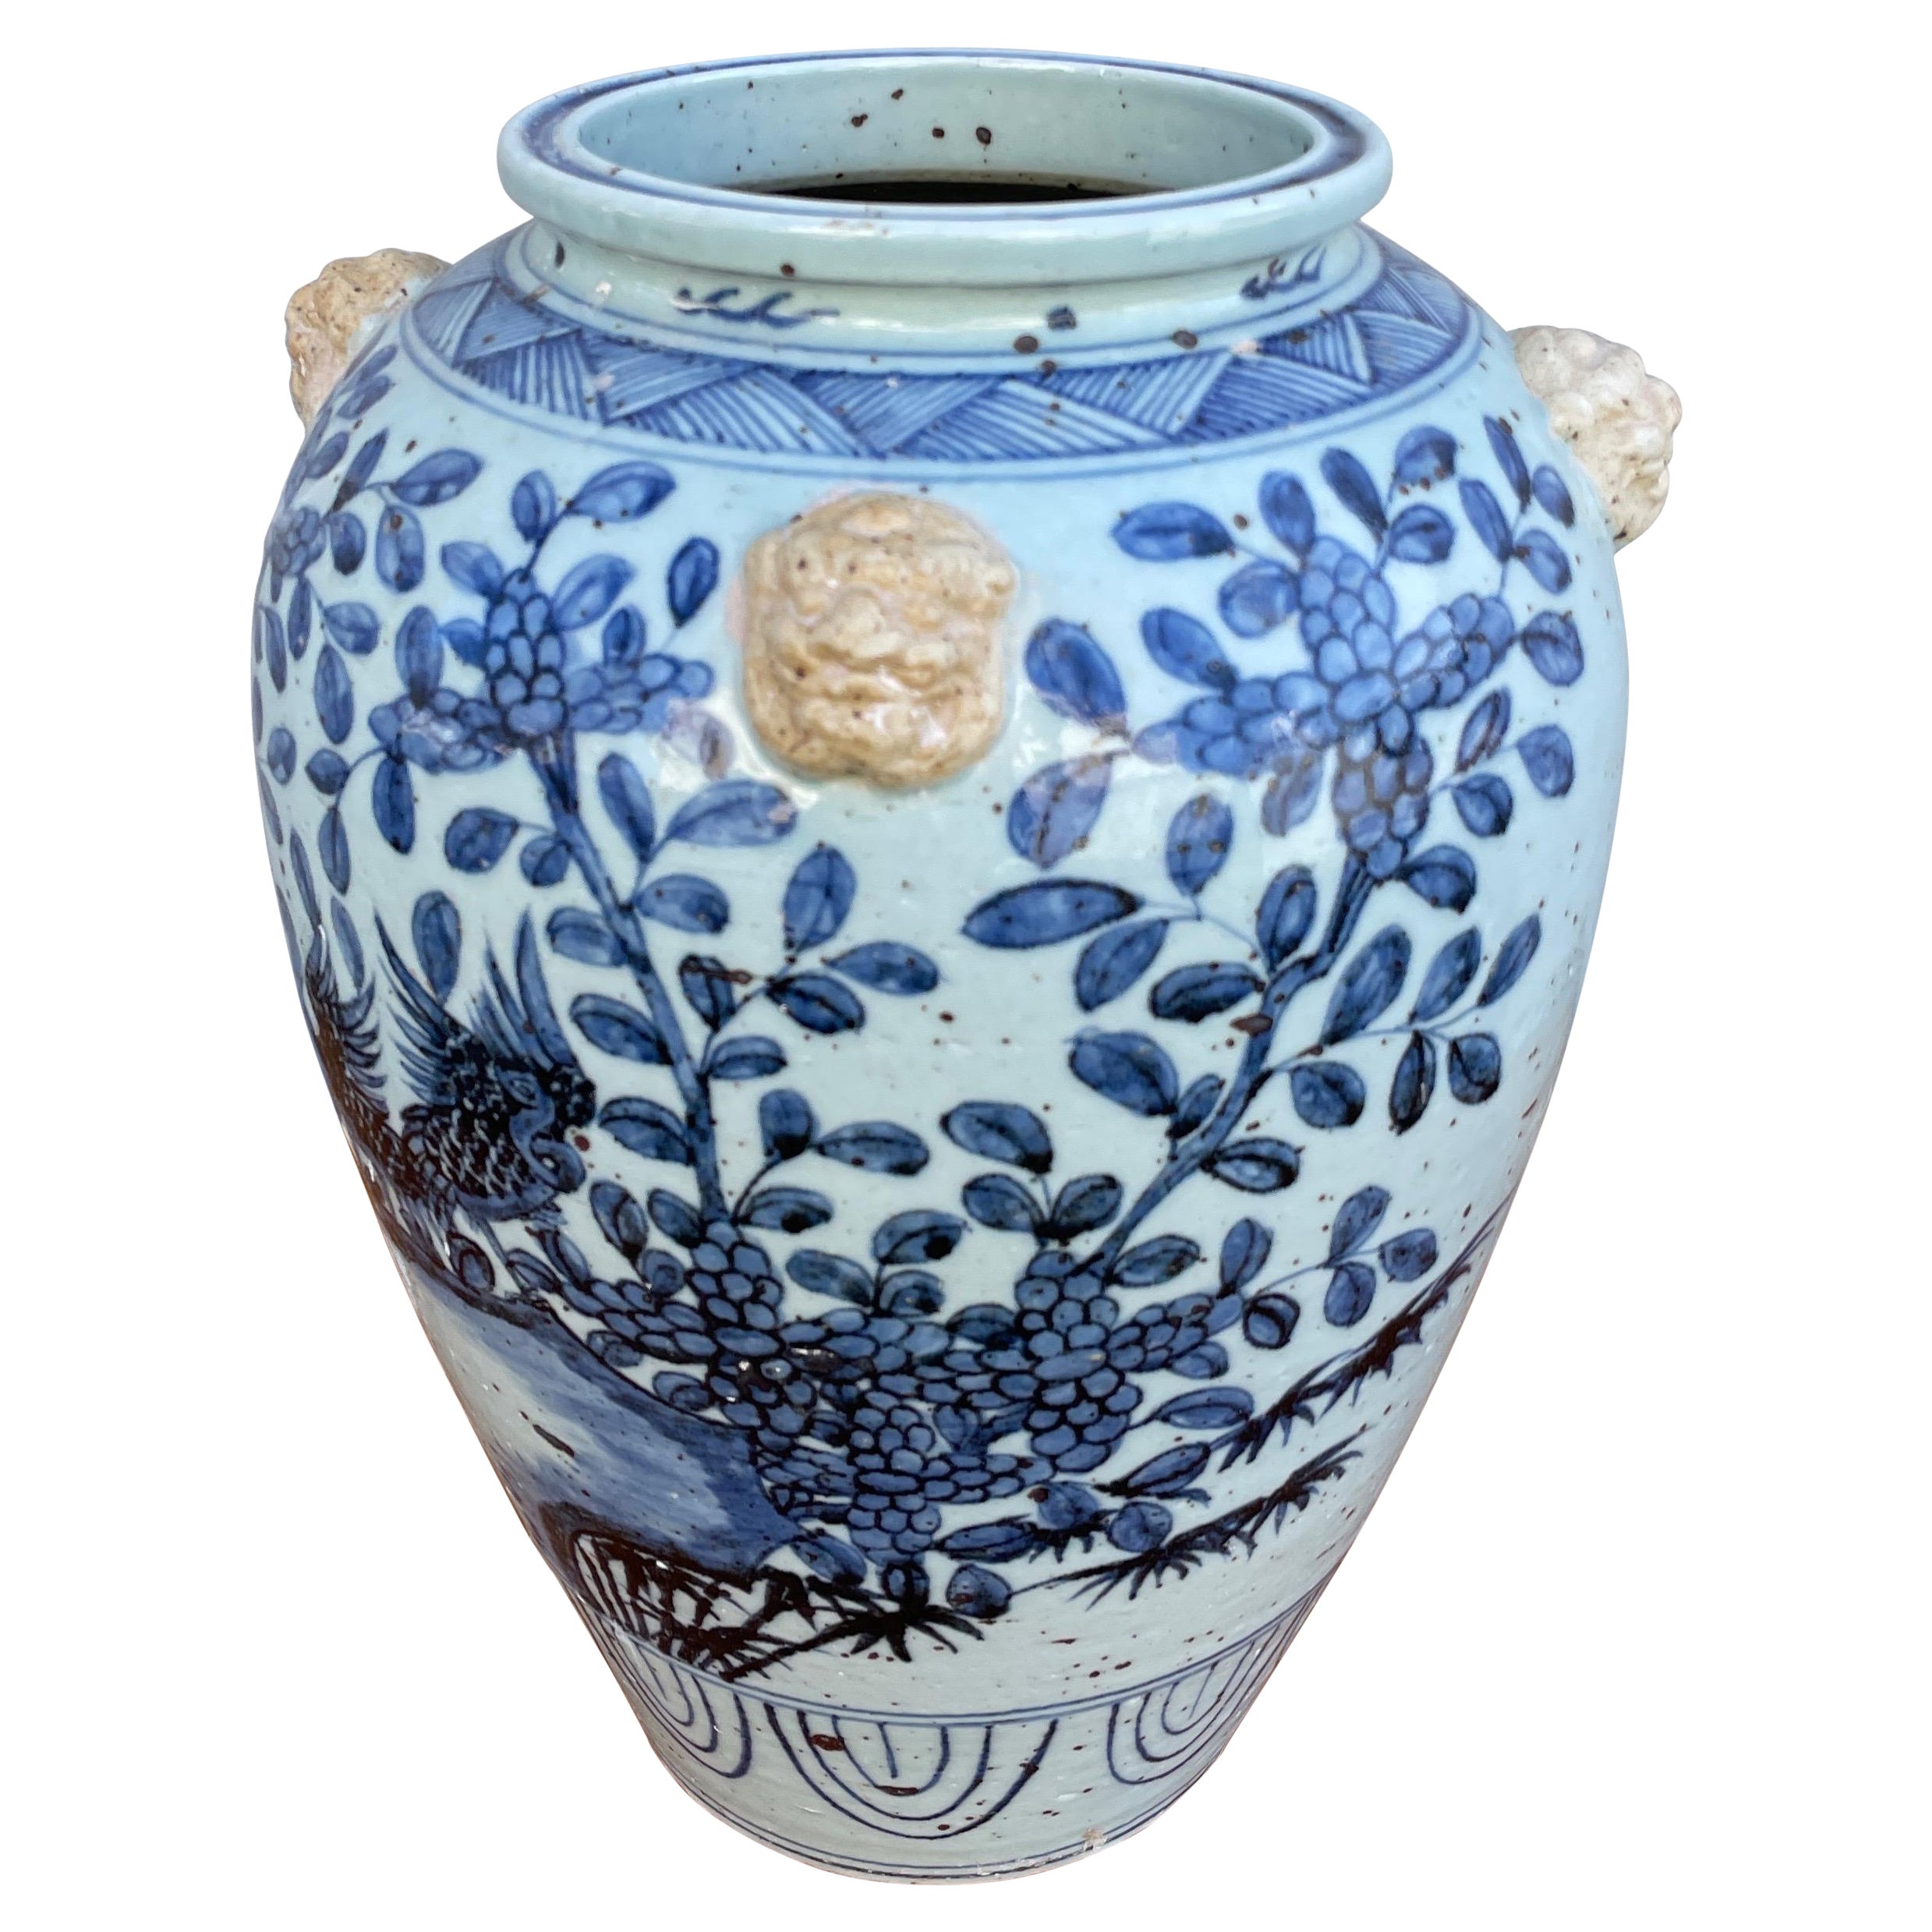 Grand vase chinois bleu et blanc